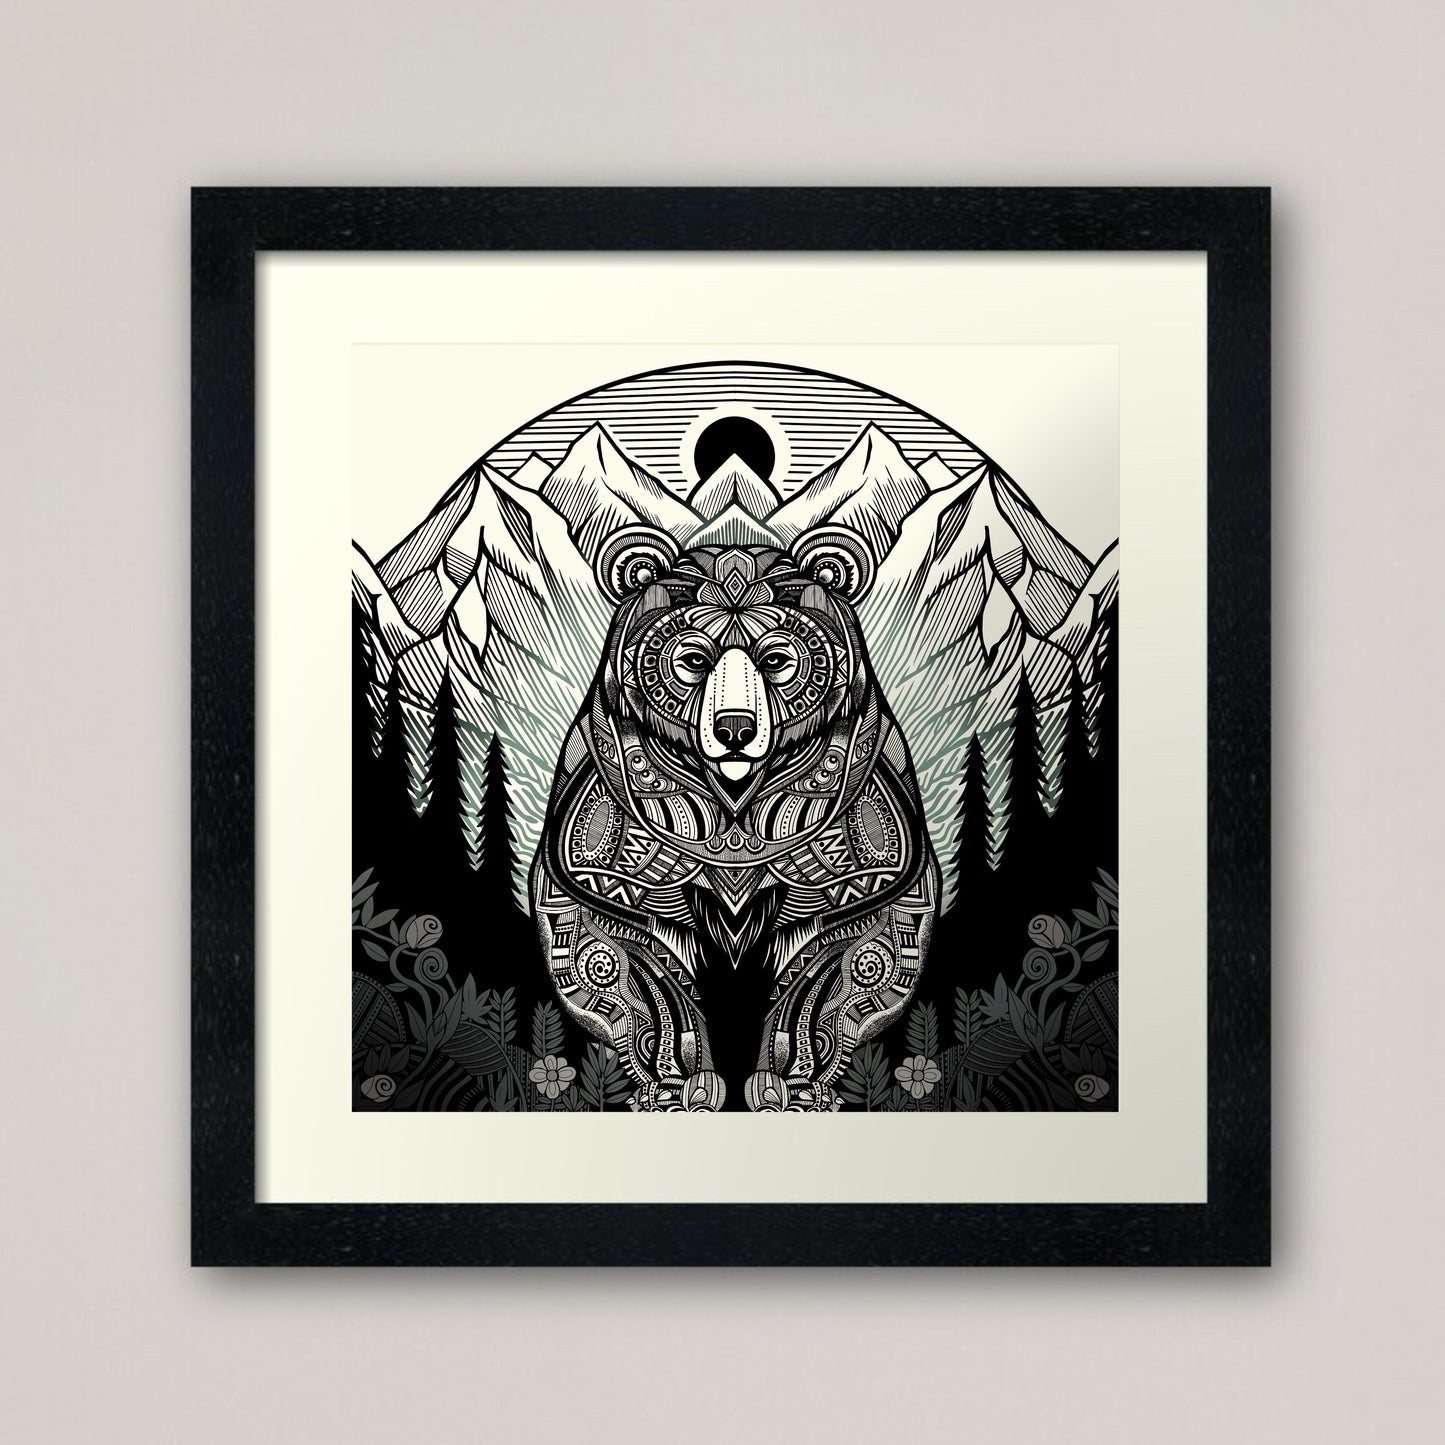 Bear in the Mountains print - retro geometric zentangle tribal animal Illustration nature print/poster